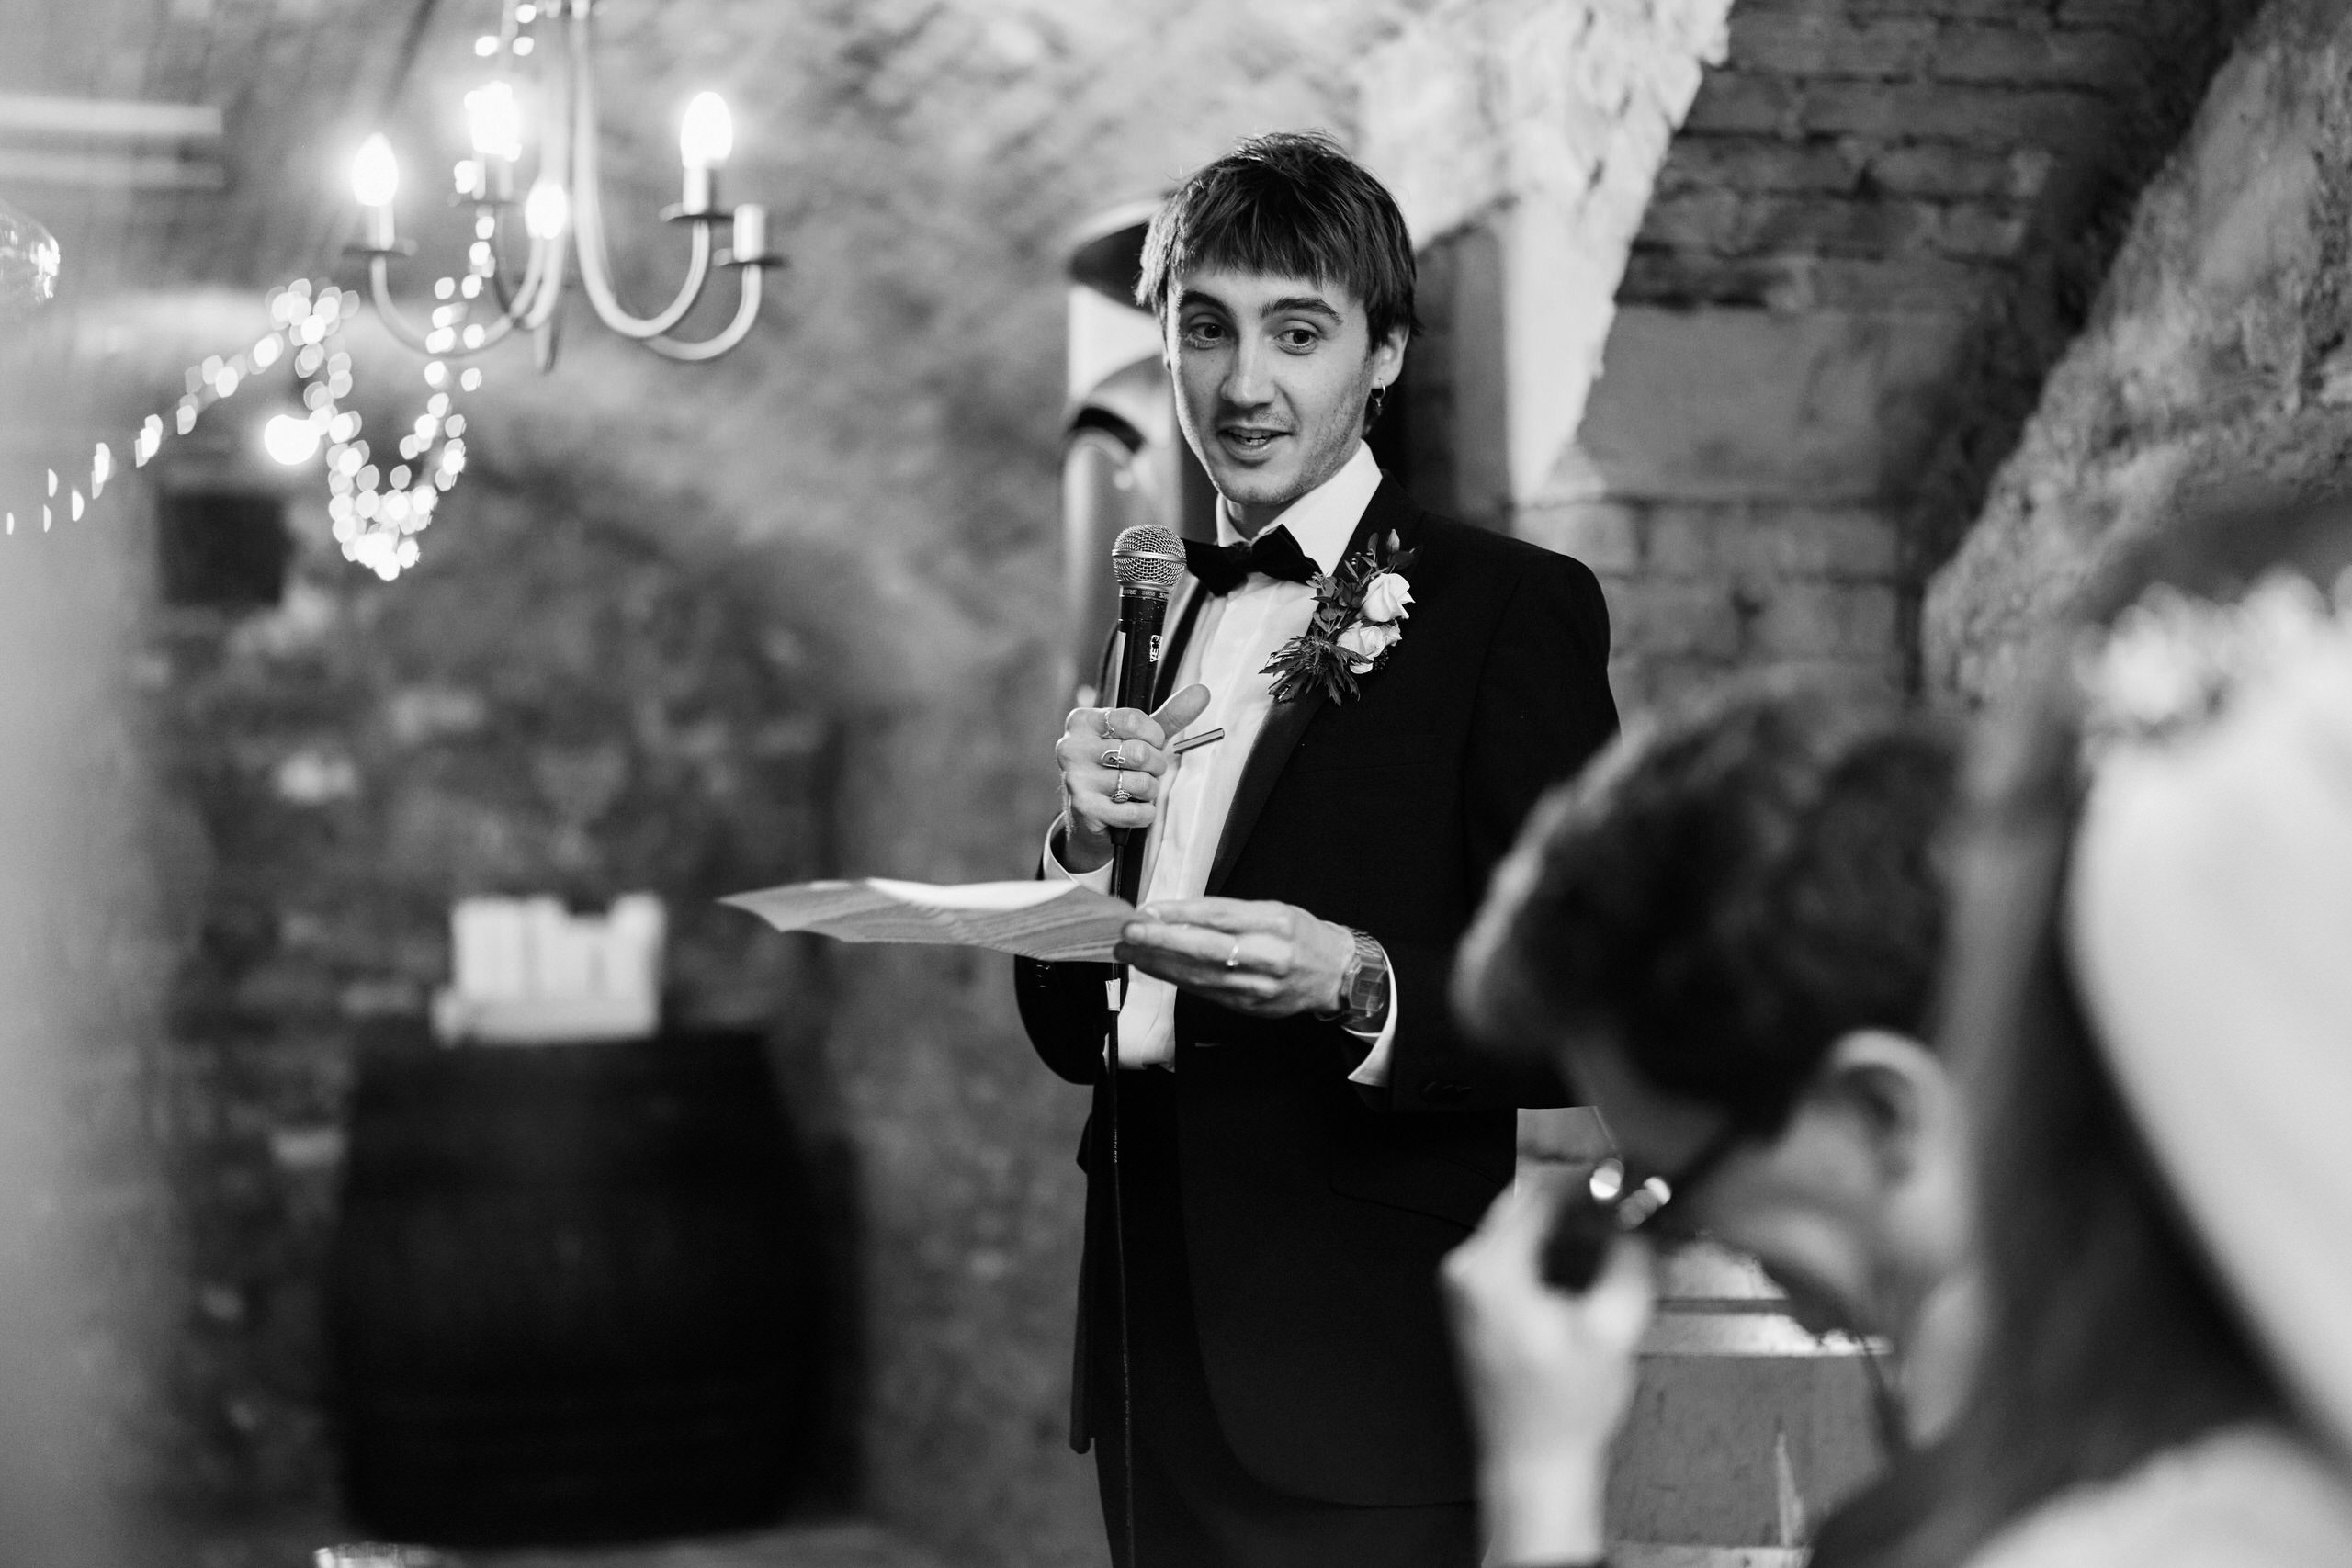 A guy in a fancy suit is talking at a wedding.